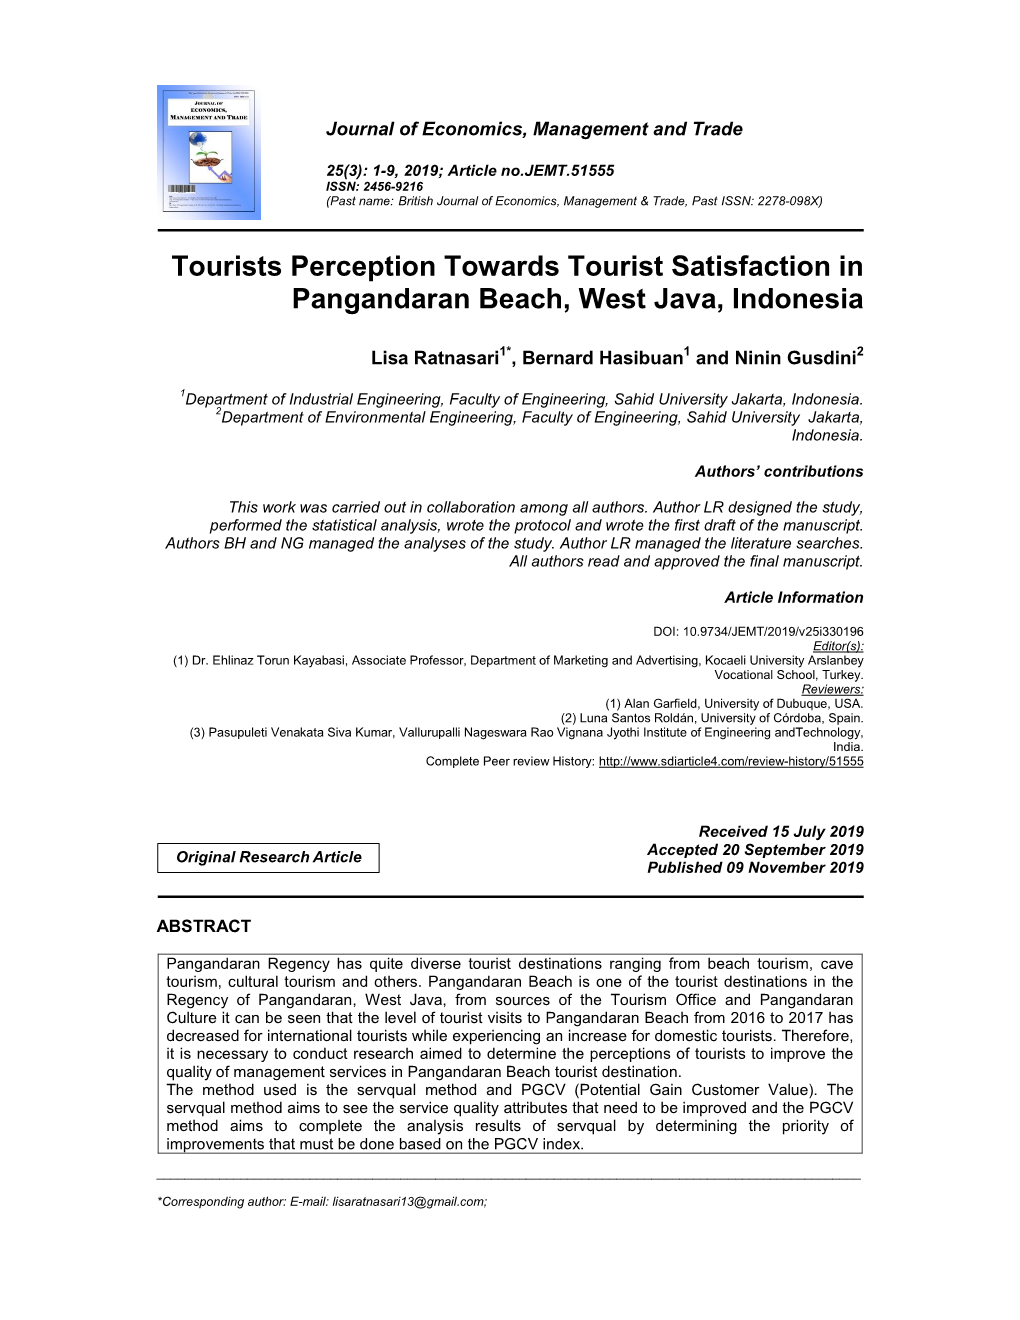 Tourists Perception Towards Tourist Satisfaction in Pangandaran Beach, West Java, Indonesia